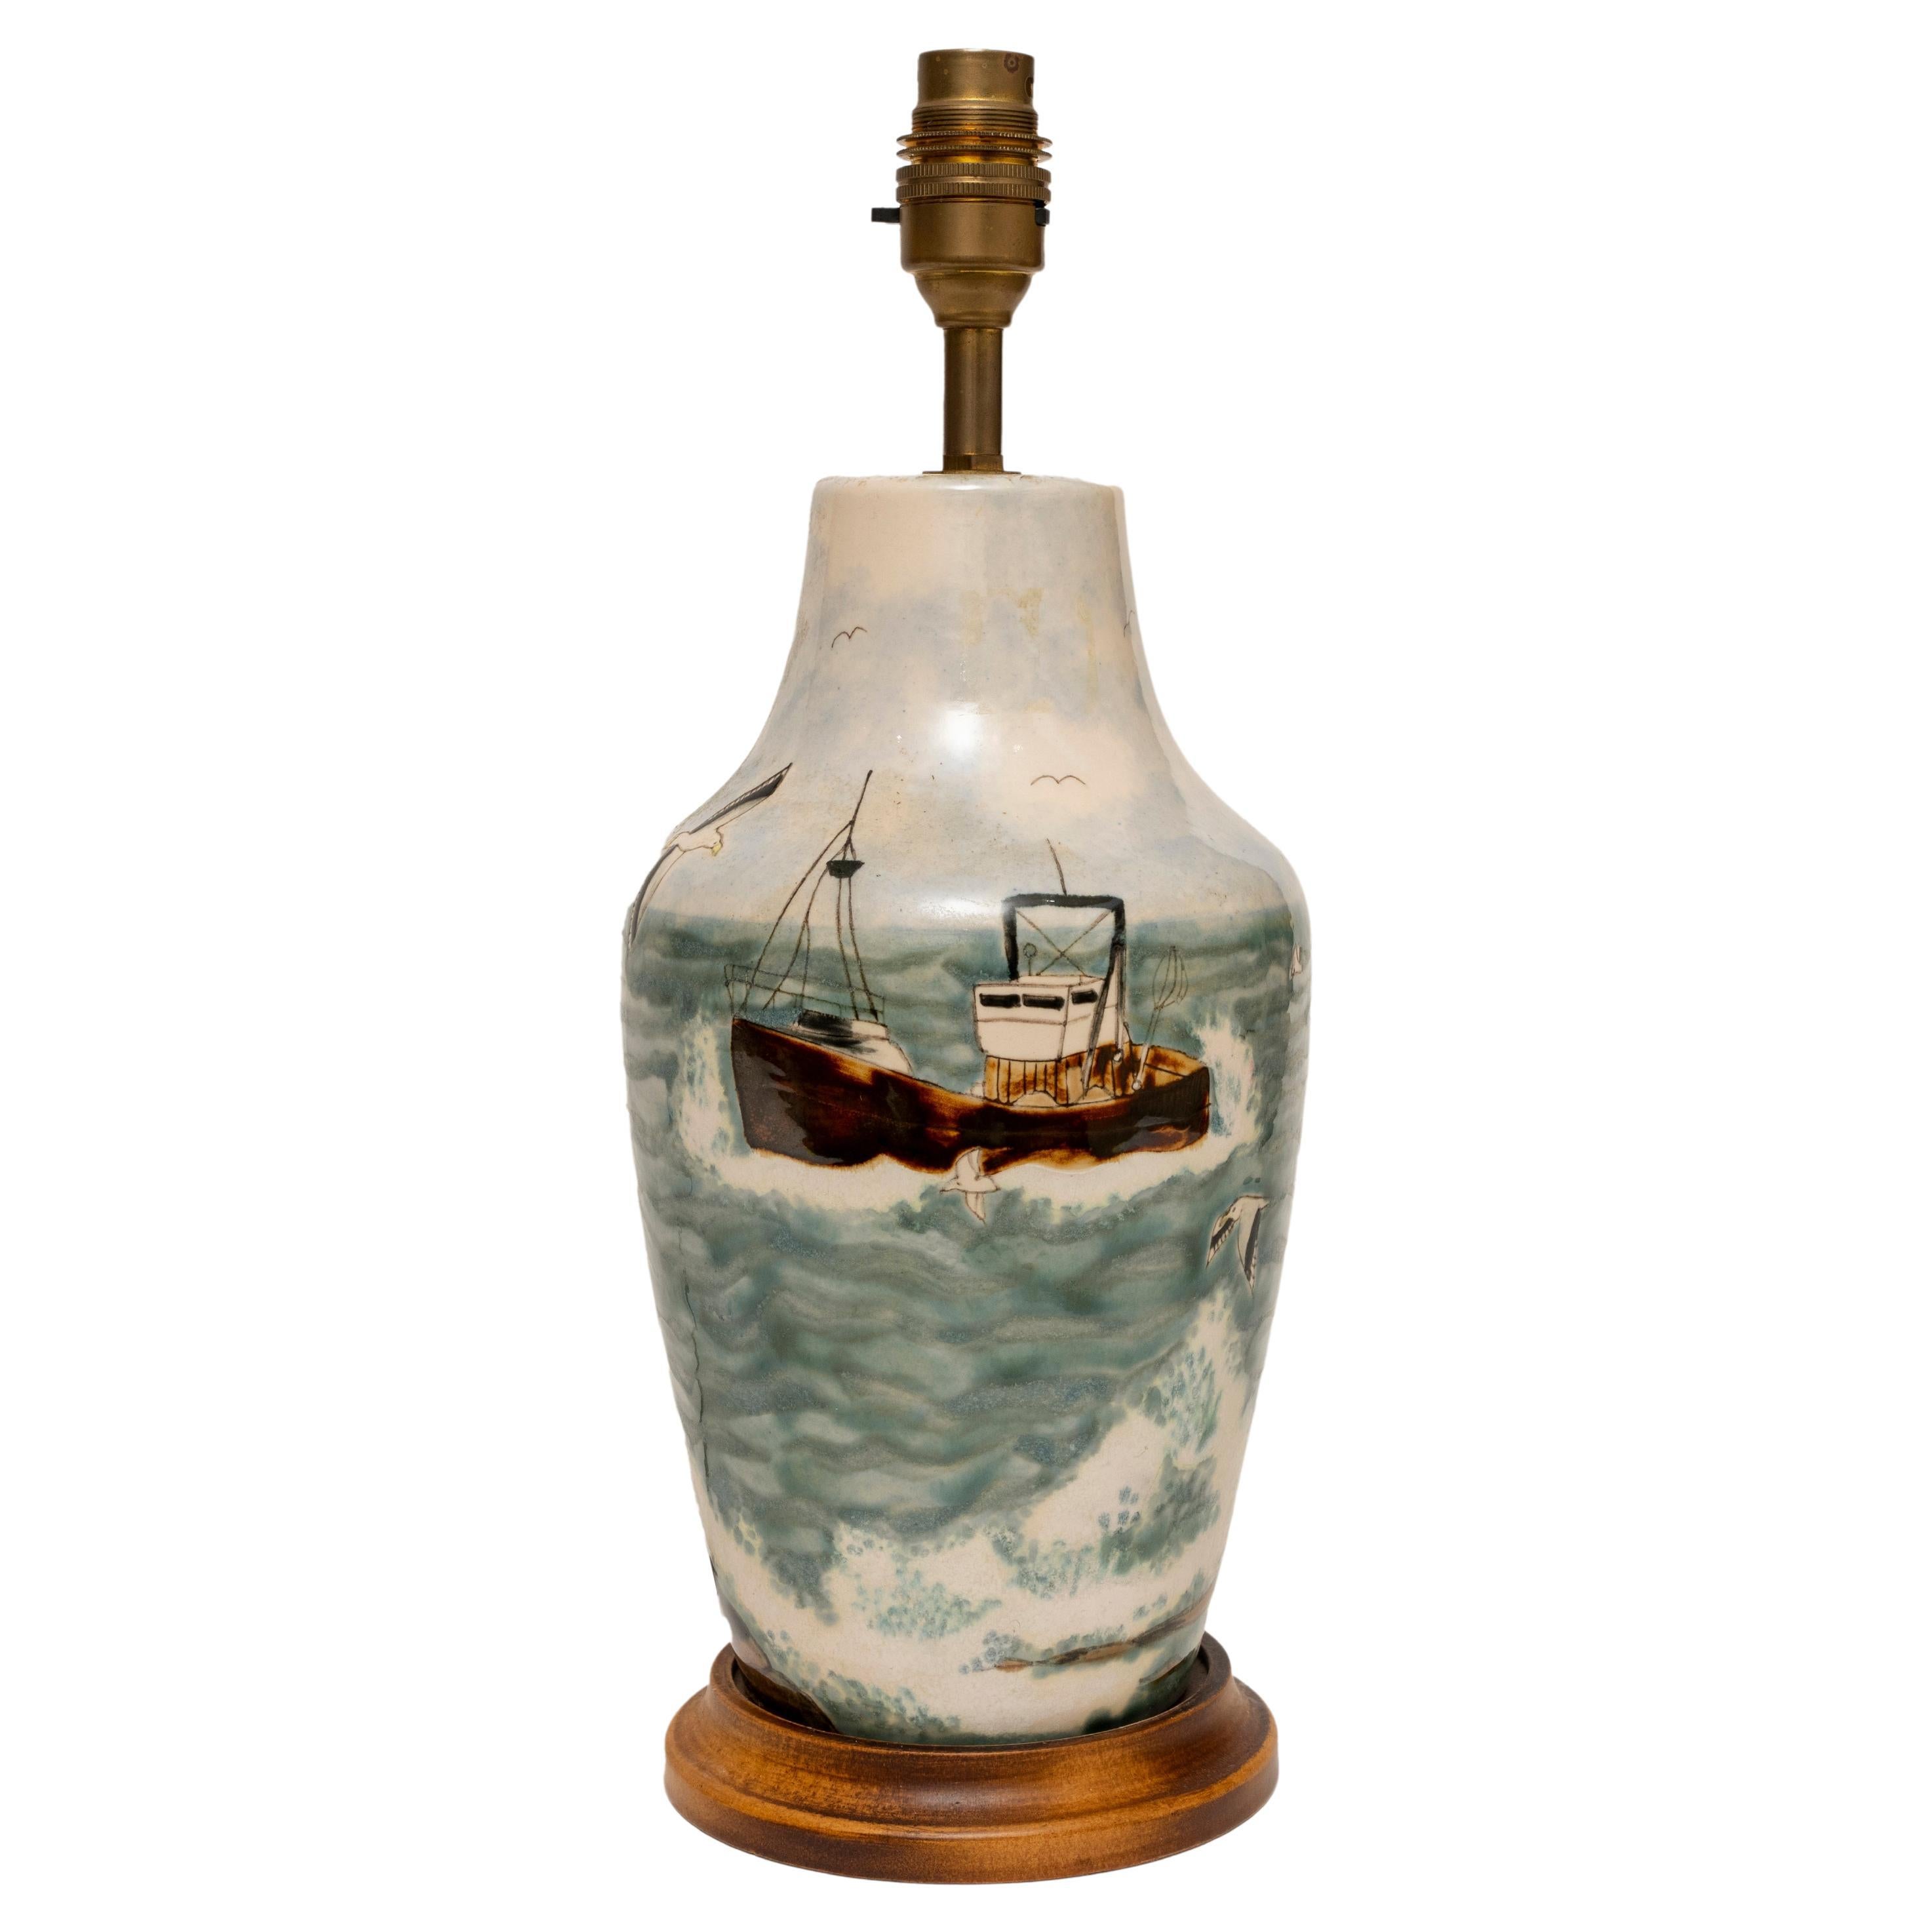 Lamp Table Vase Cobridge Stoneware Trawler at Sea Seagulls Rock 37cm/14.5" high For Sale